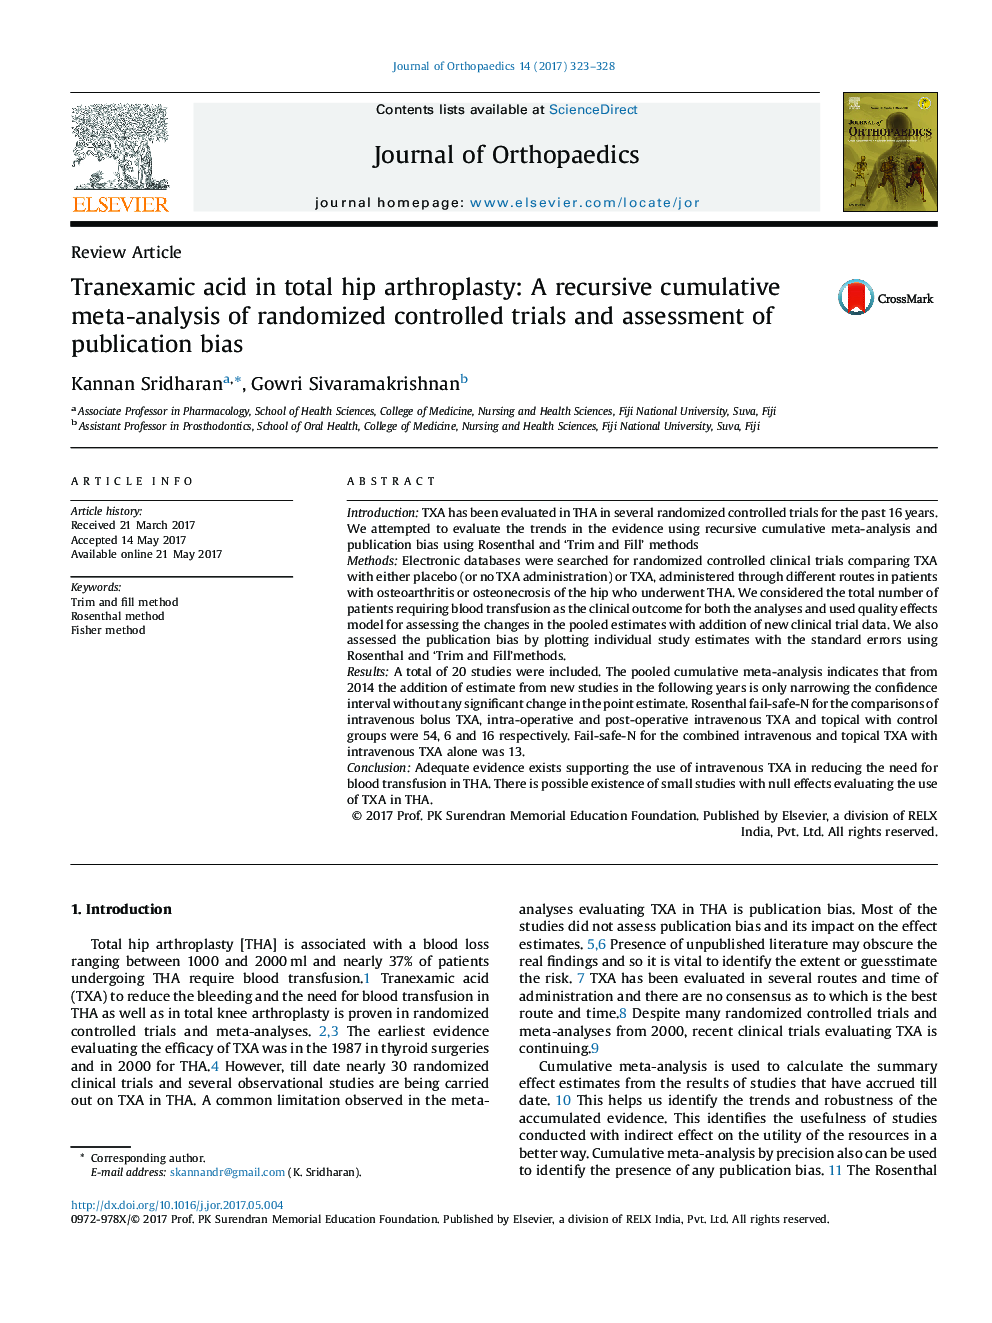 Tranexamic acid in total hip arthroplasty: A recursive cumulative meta-analysis of randomized controlled trials and assessment of publication bias